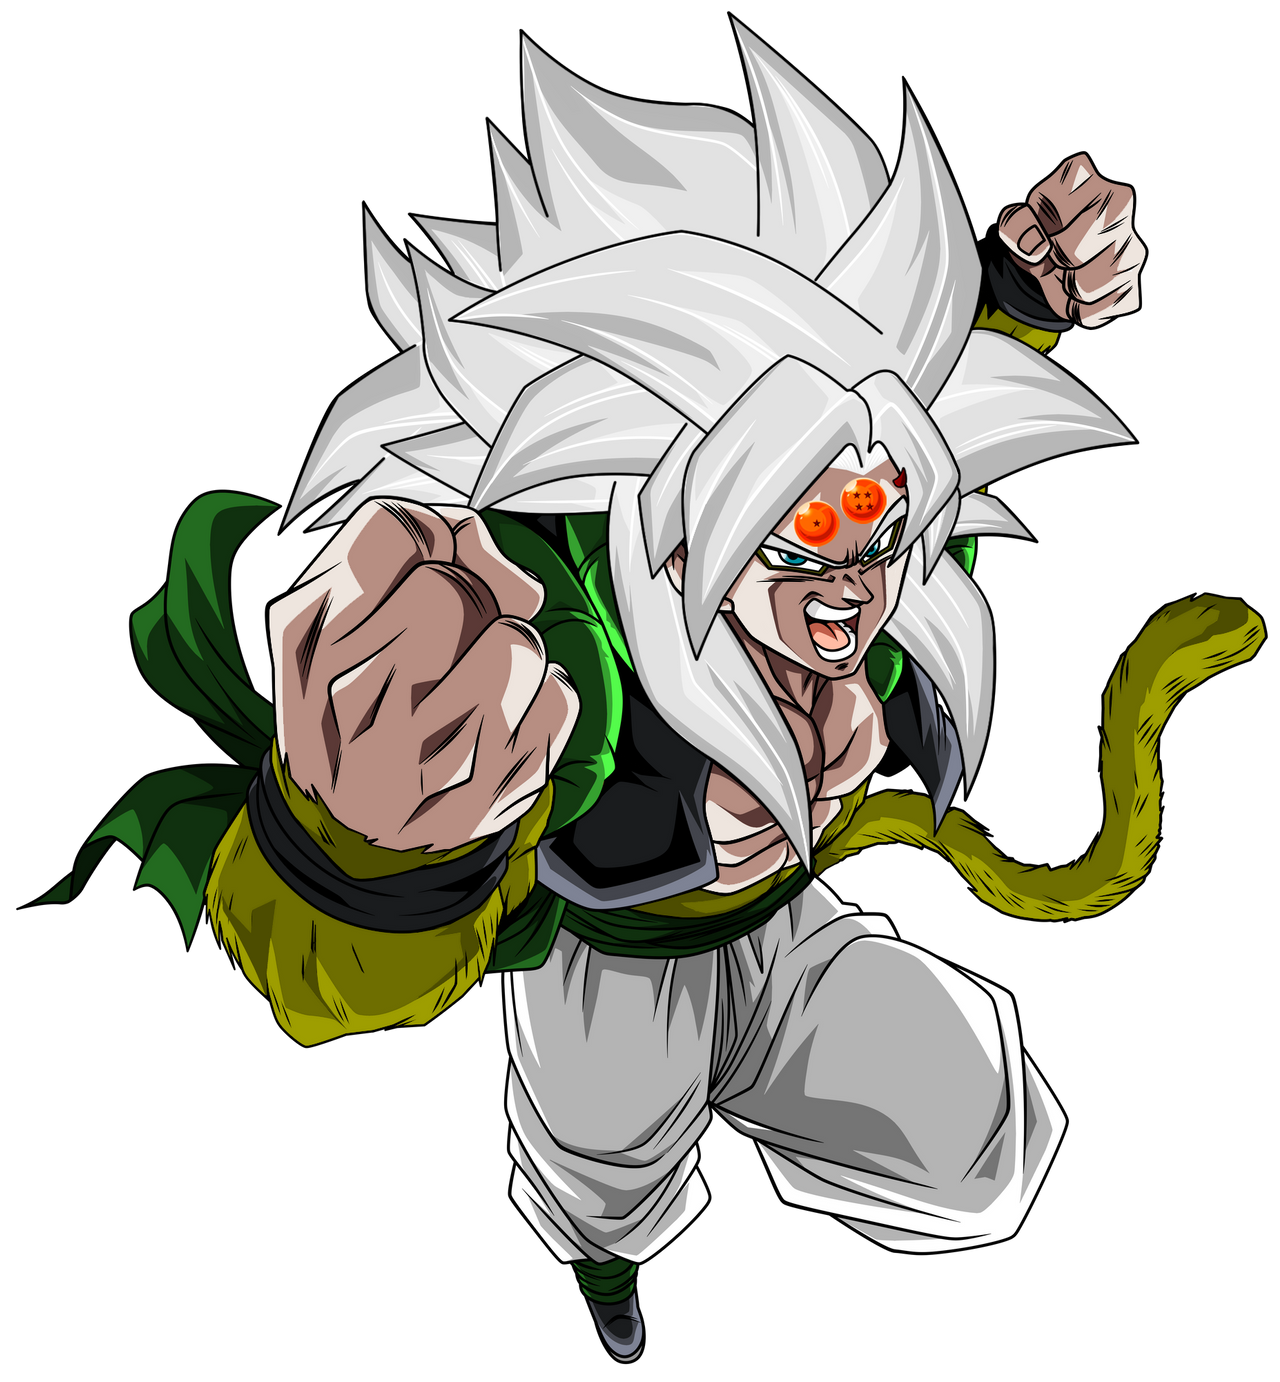 Goku AF - Super Saiyajin 6 by SebaToledo on DeviantArt